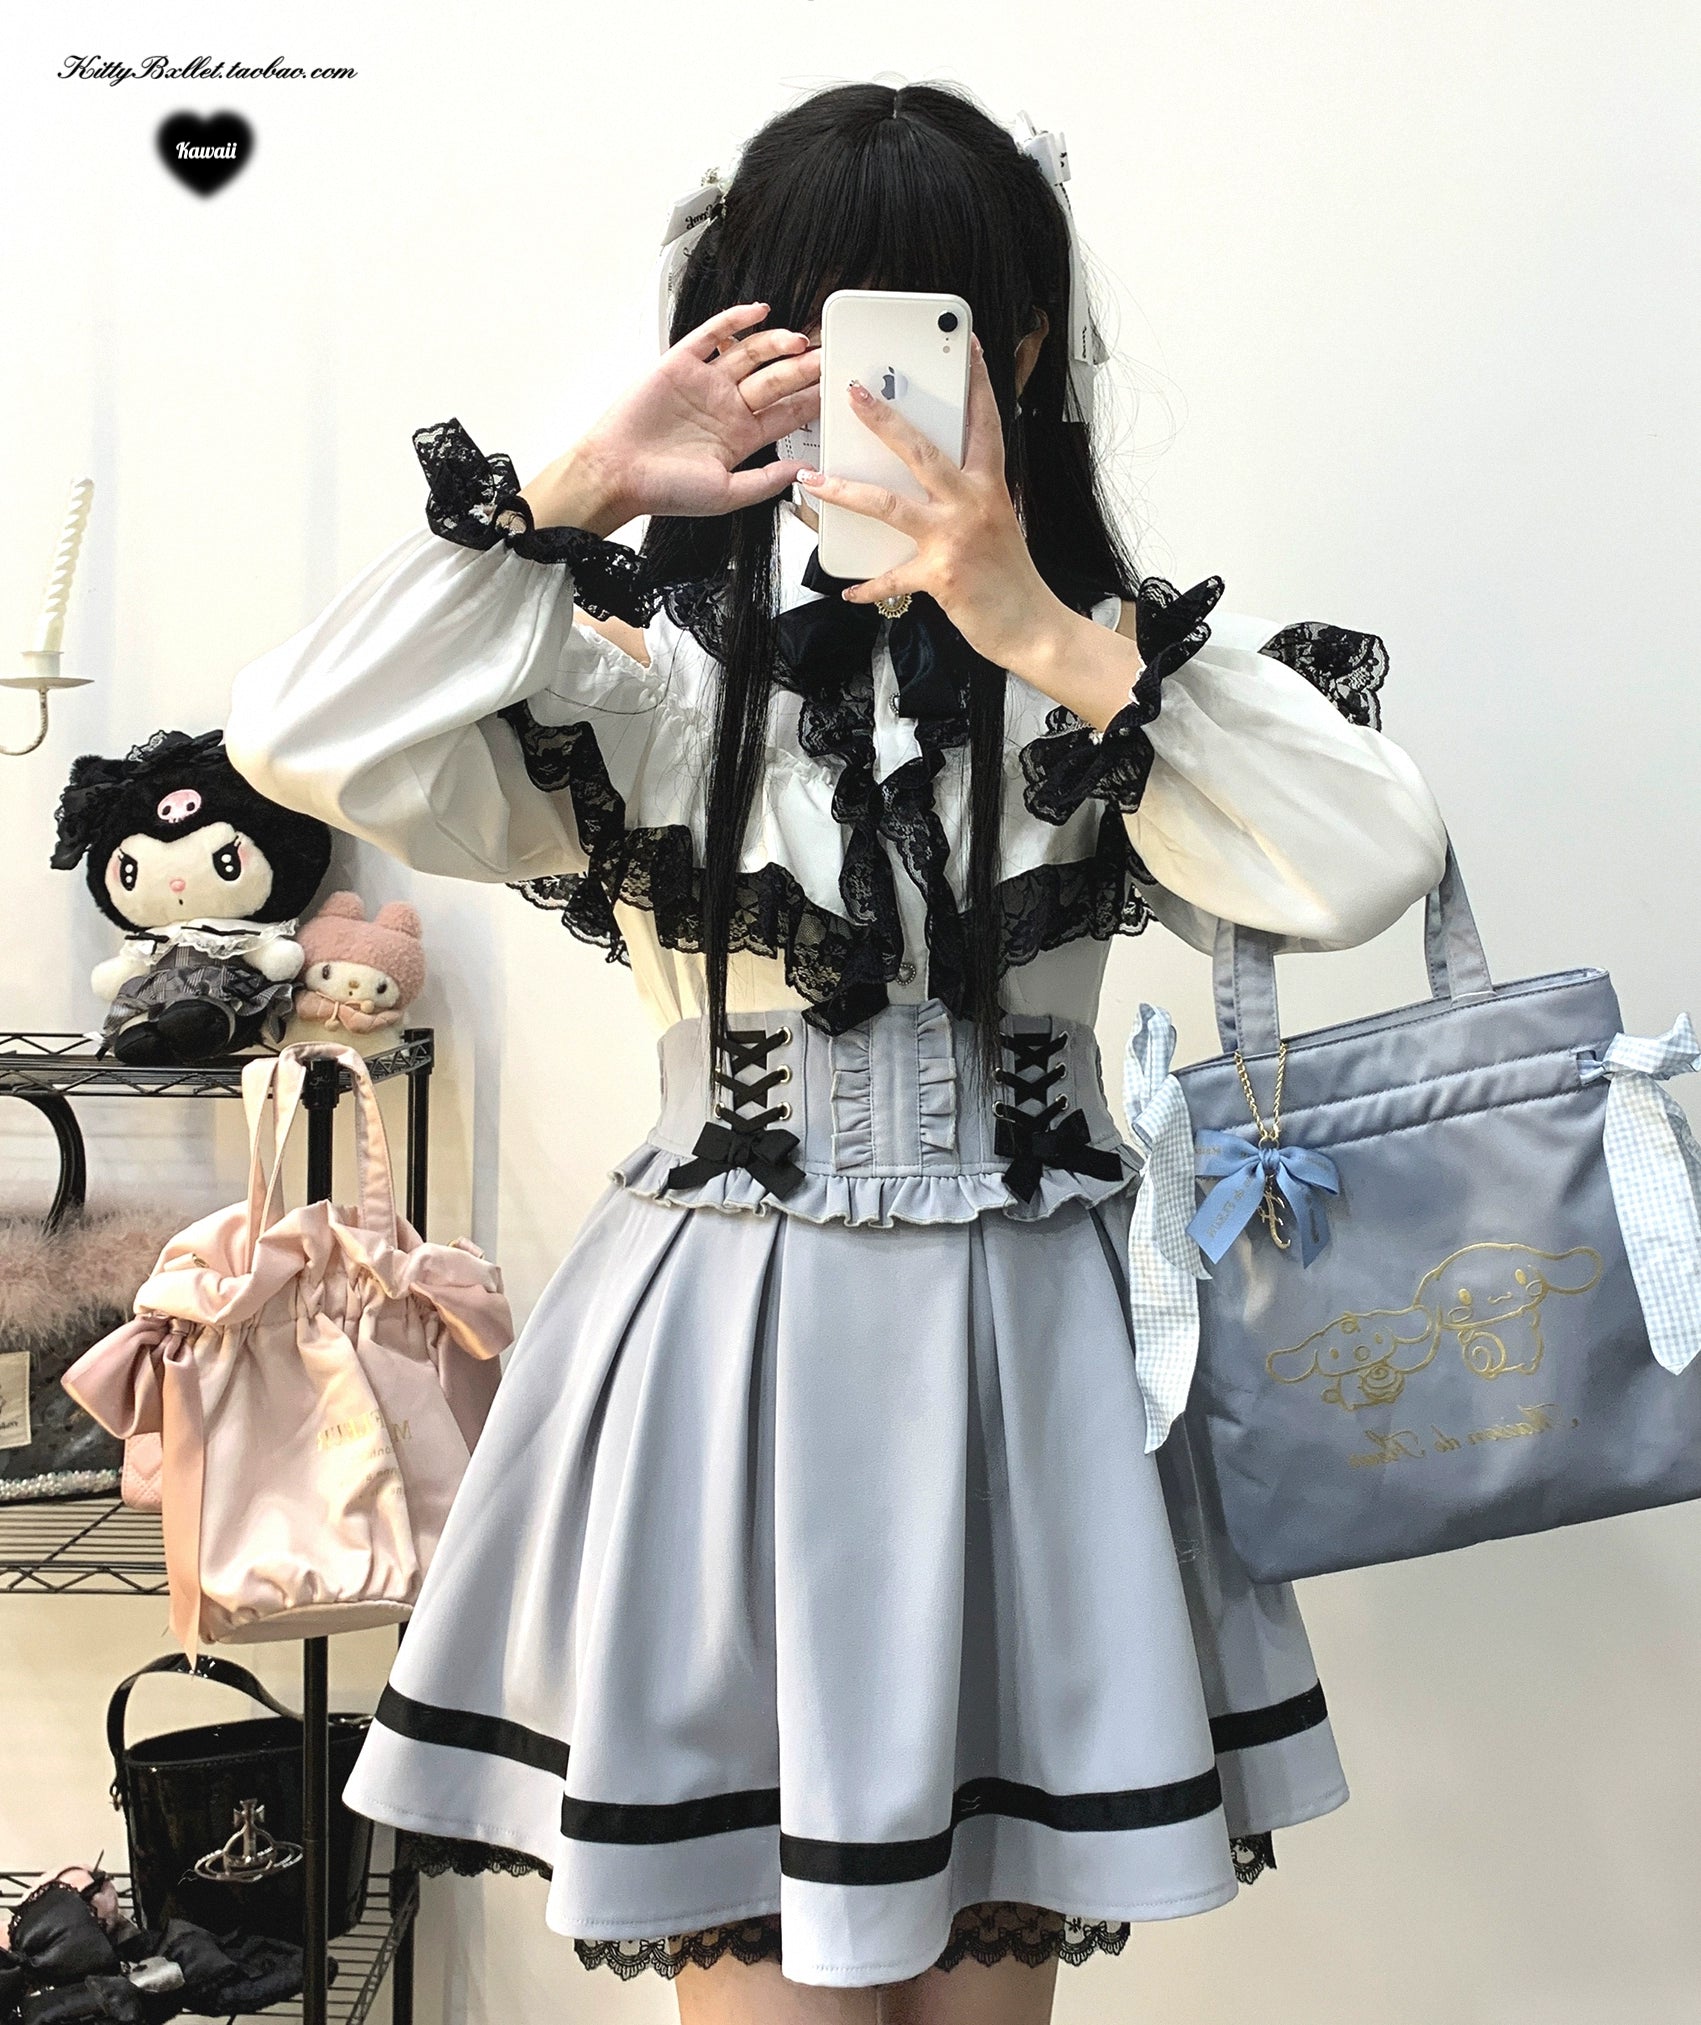 Jirai Kei Skirt High Waist Lace Up Skirt With Bow Tie 31860:396668